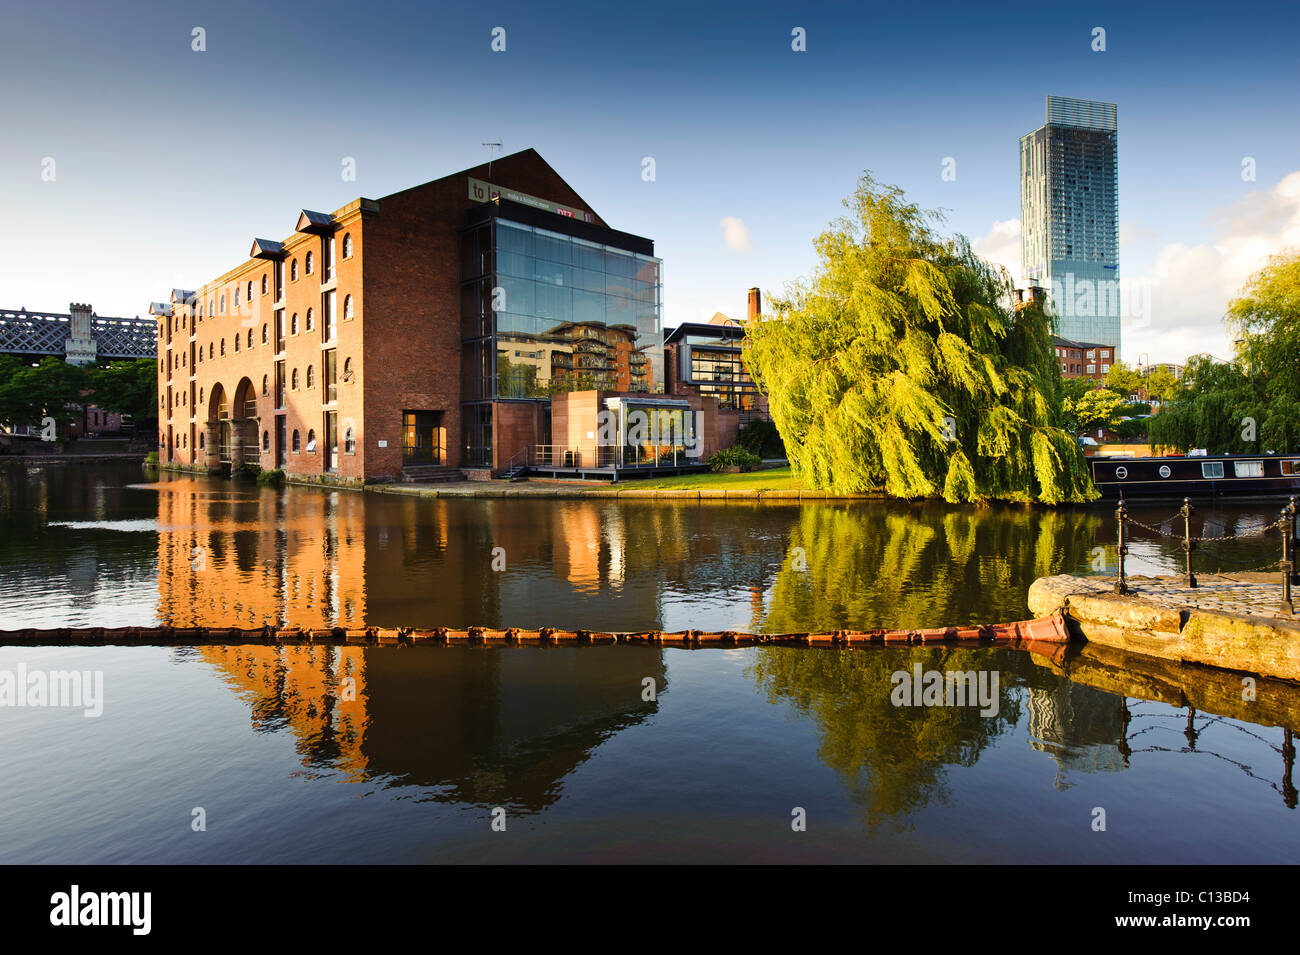 Castlefield zona del canale Manchester con beetham hilton in background Foto Stock